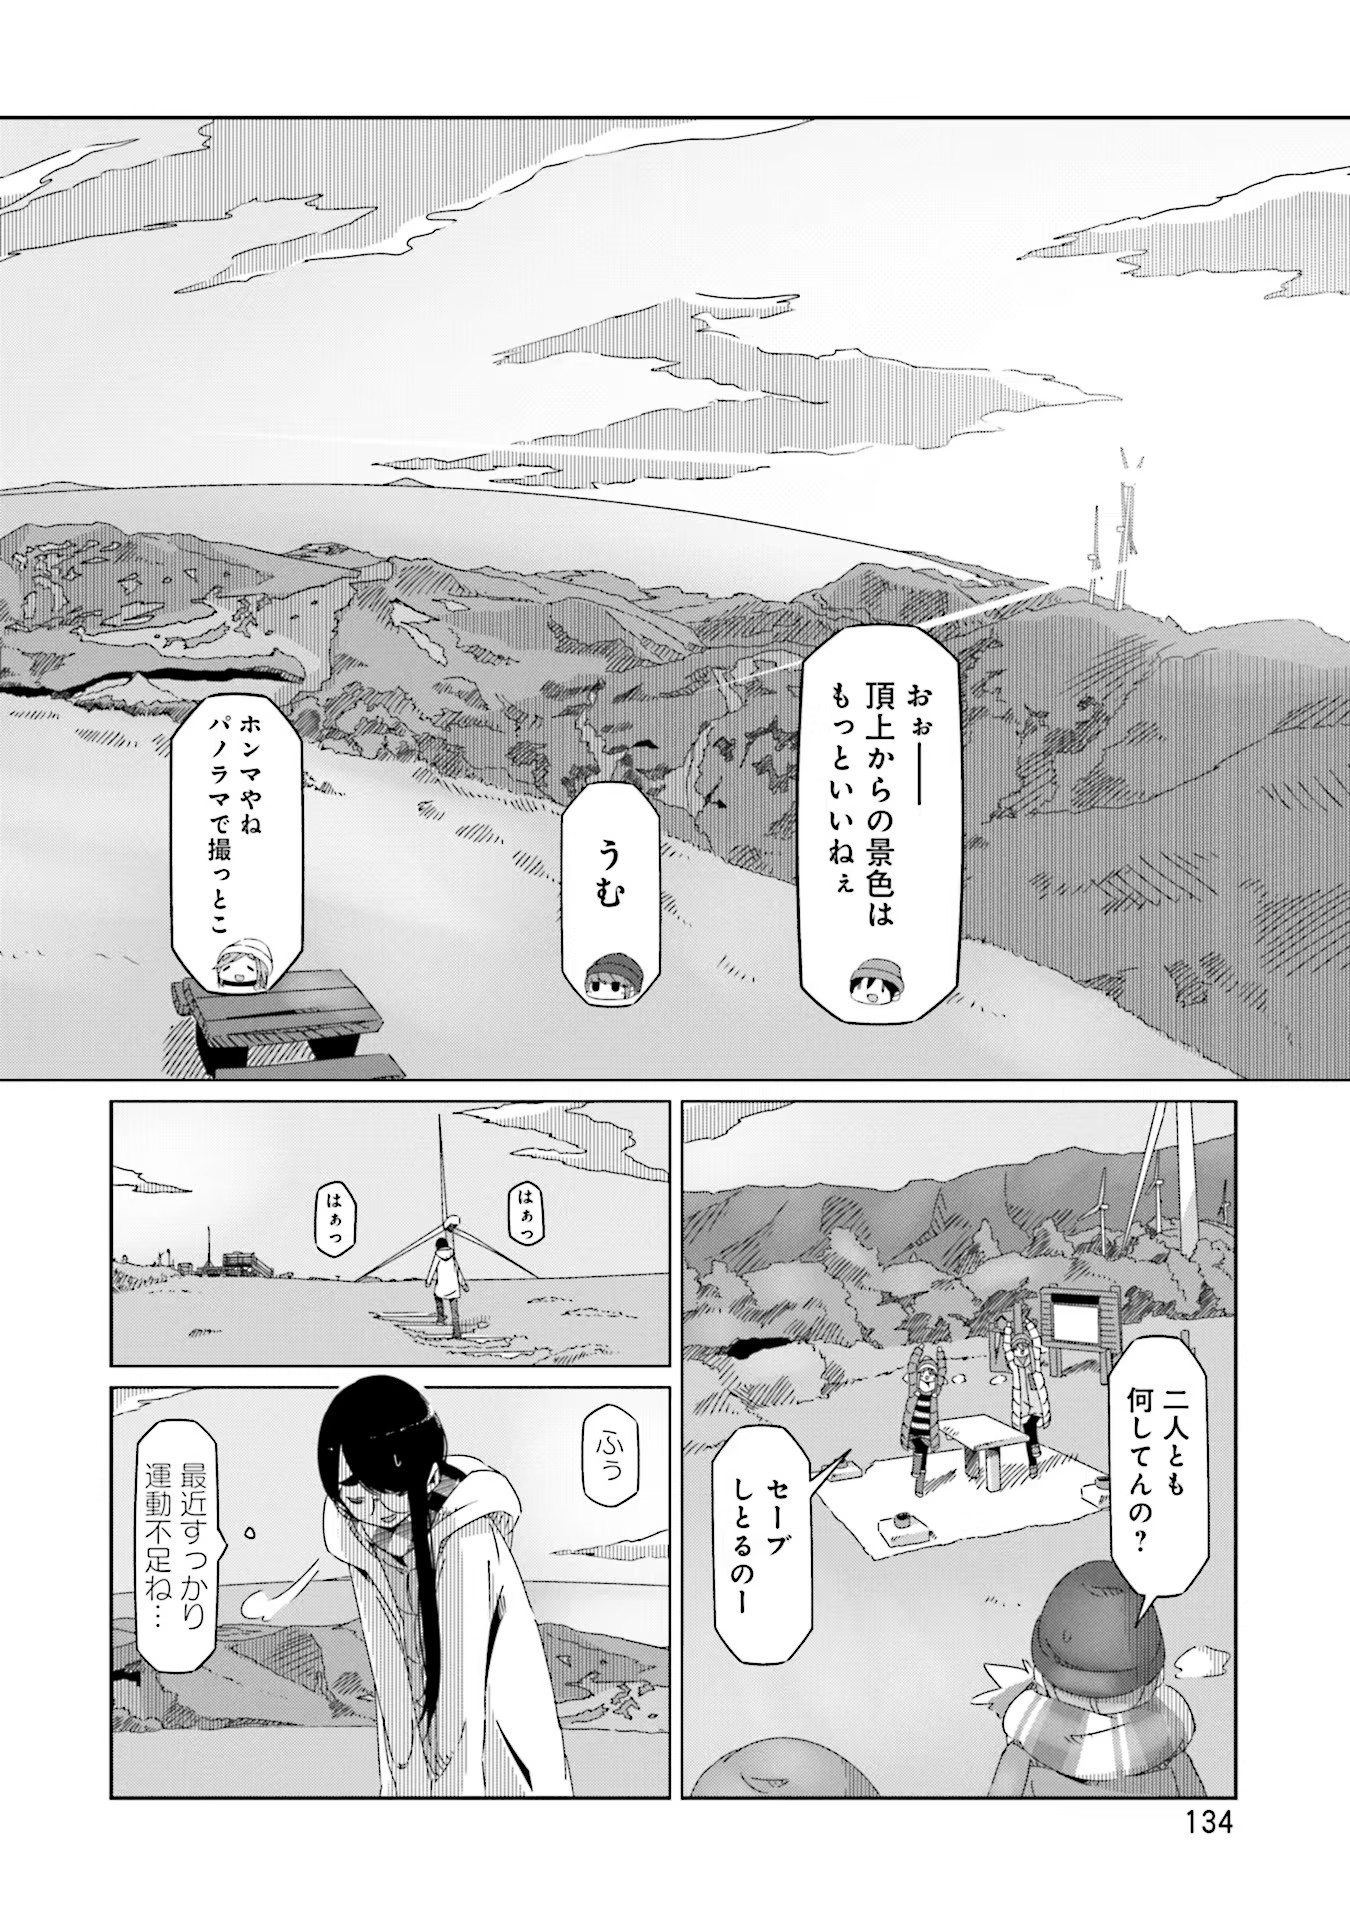 Yuru Camp - Chapter 46 - Page 2